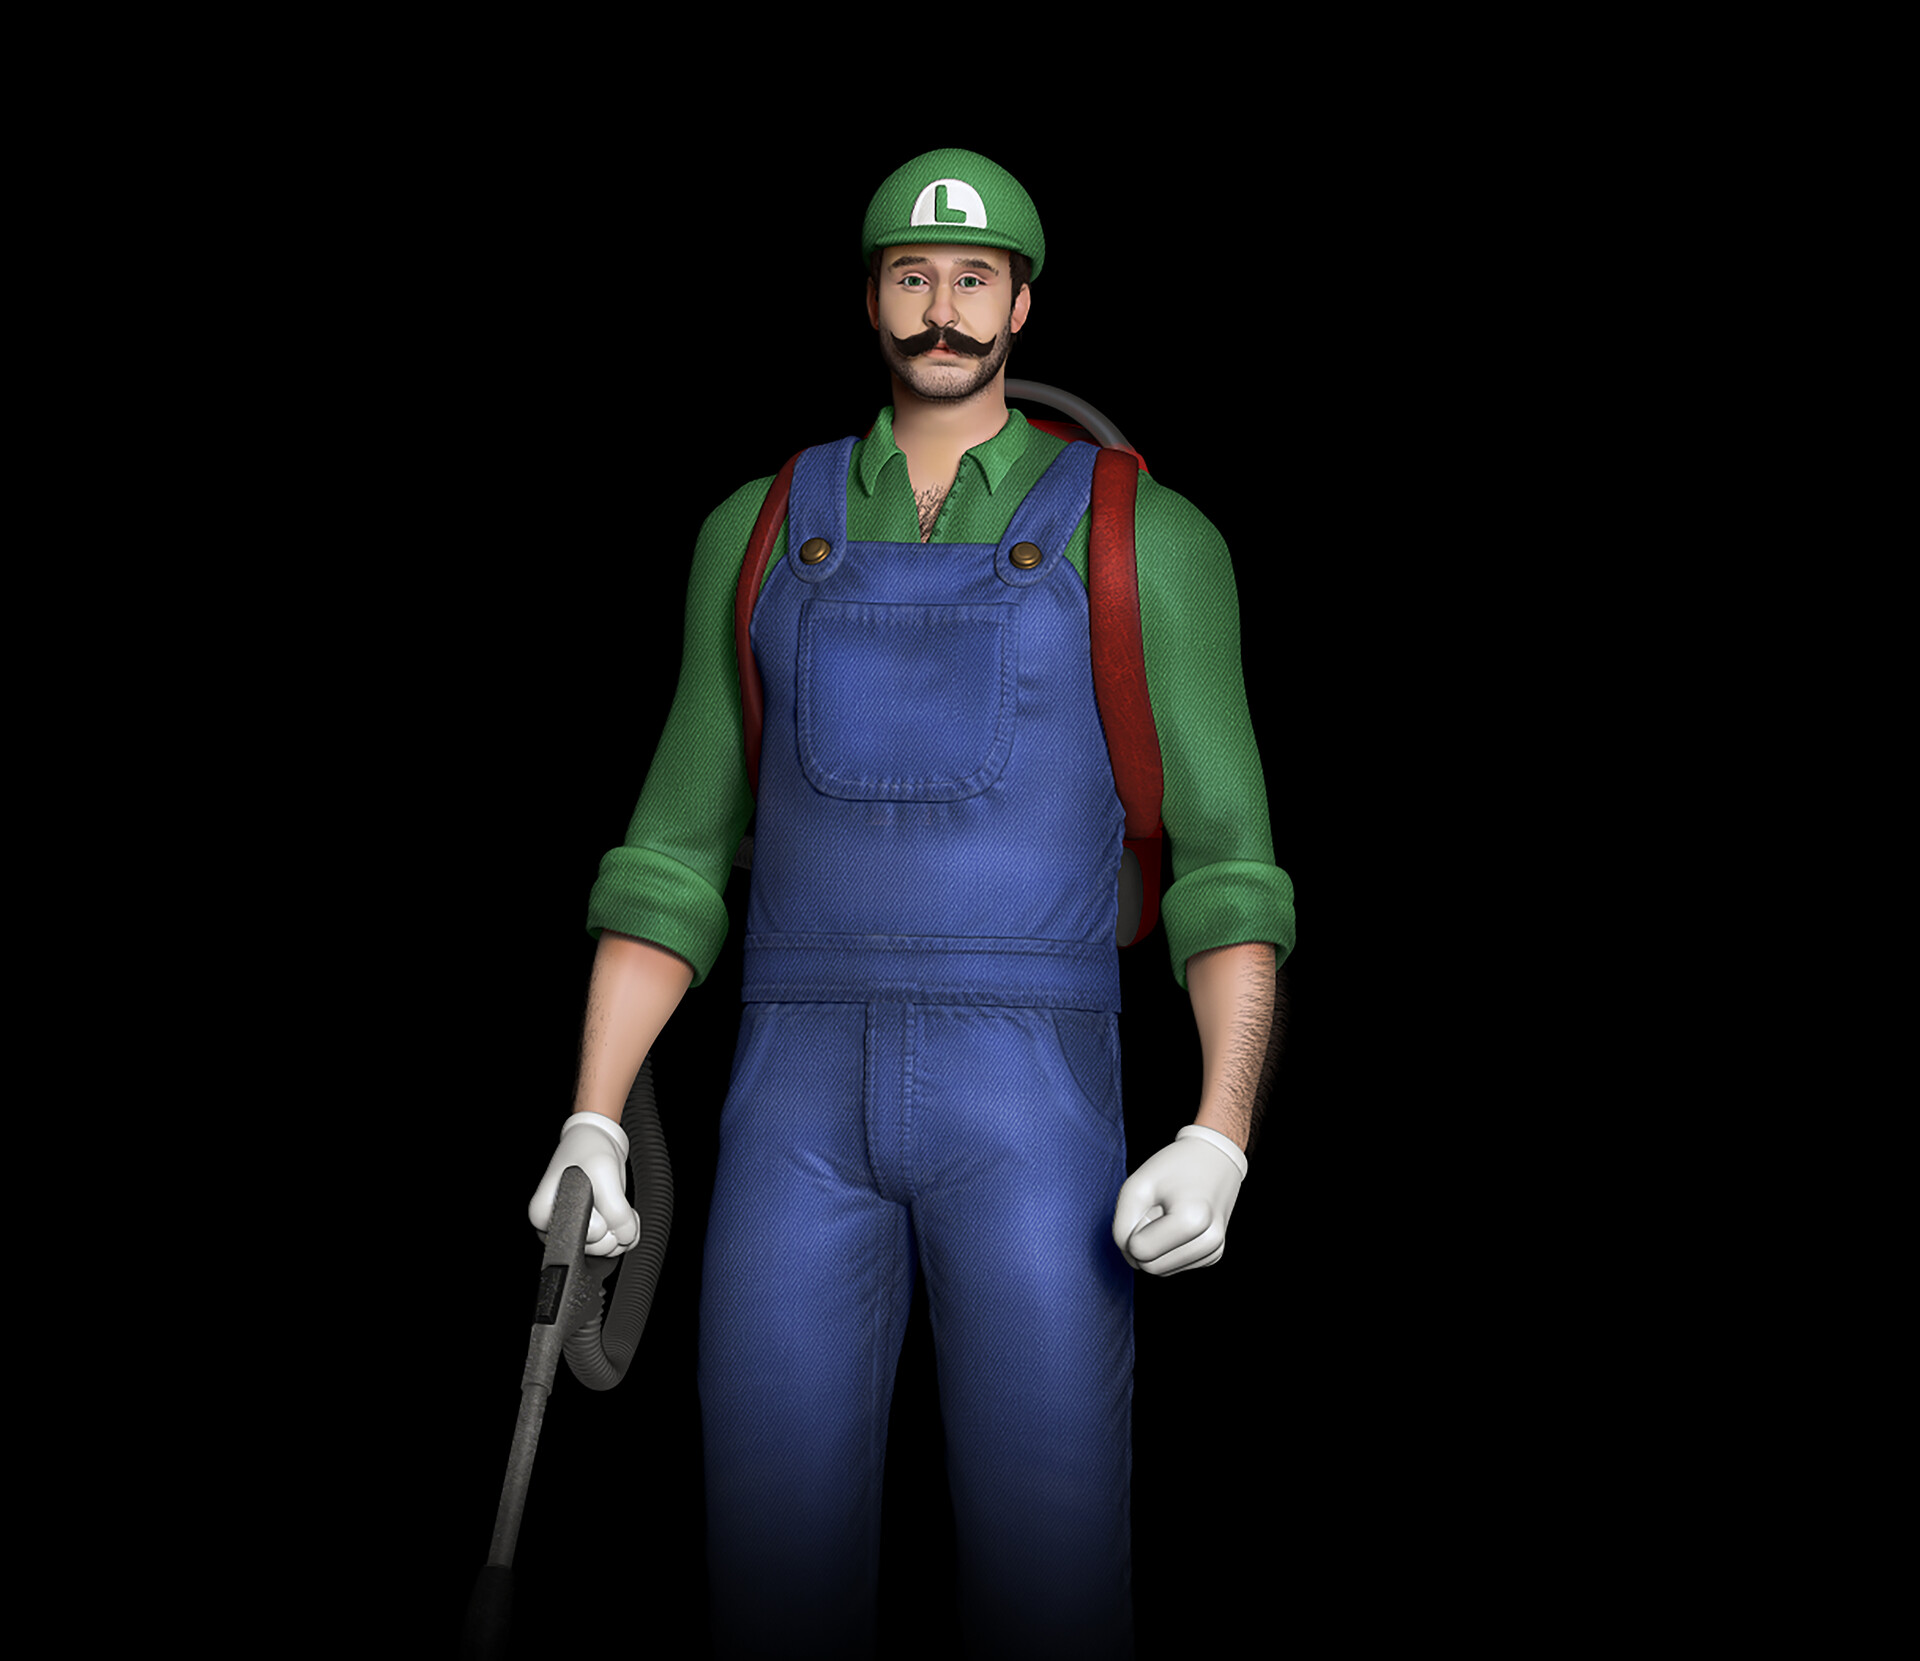 Charlie Day as Luigi by BlueMario11 on DeviantArt